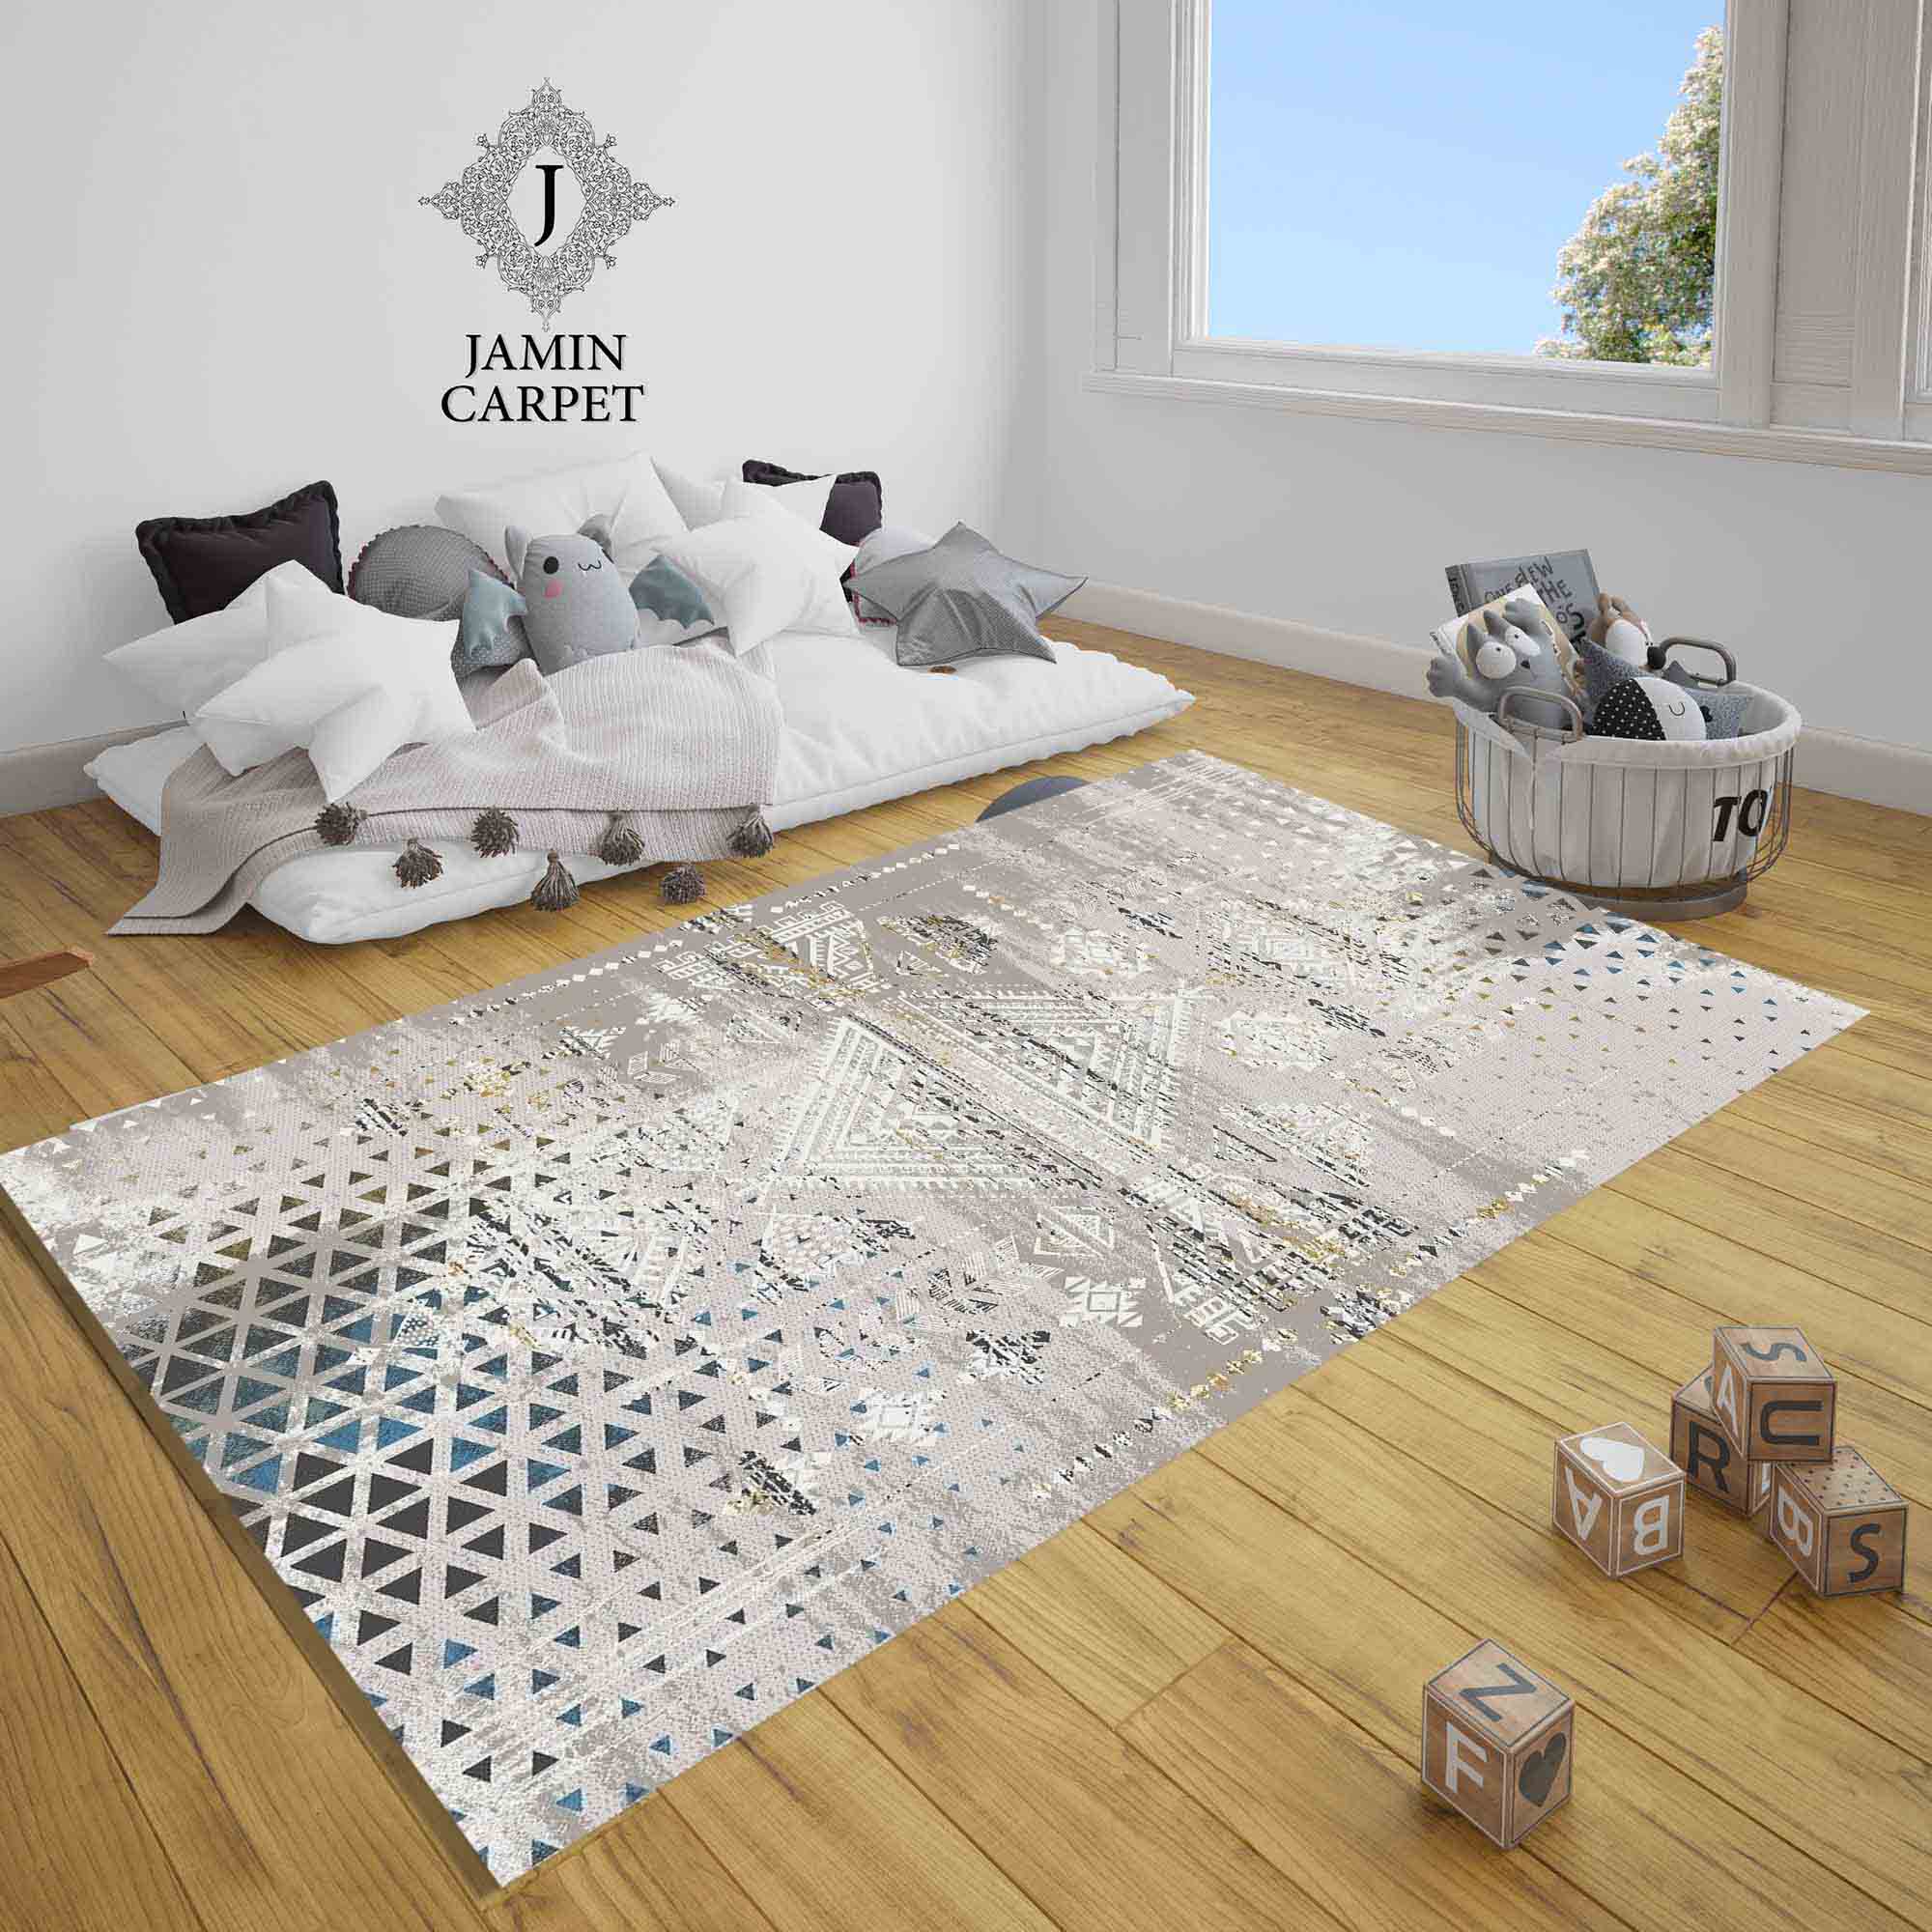 Fantasy carpet, code 256, comb 400, density 1800, all acrylic